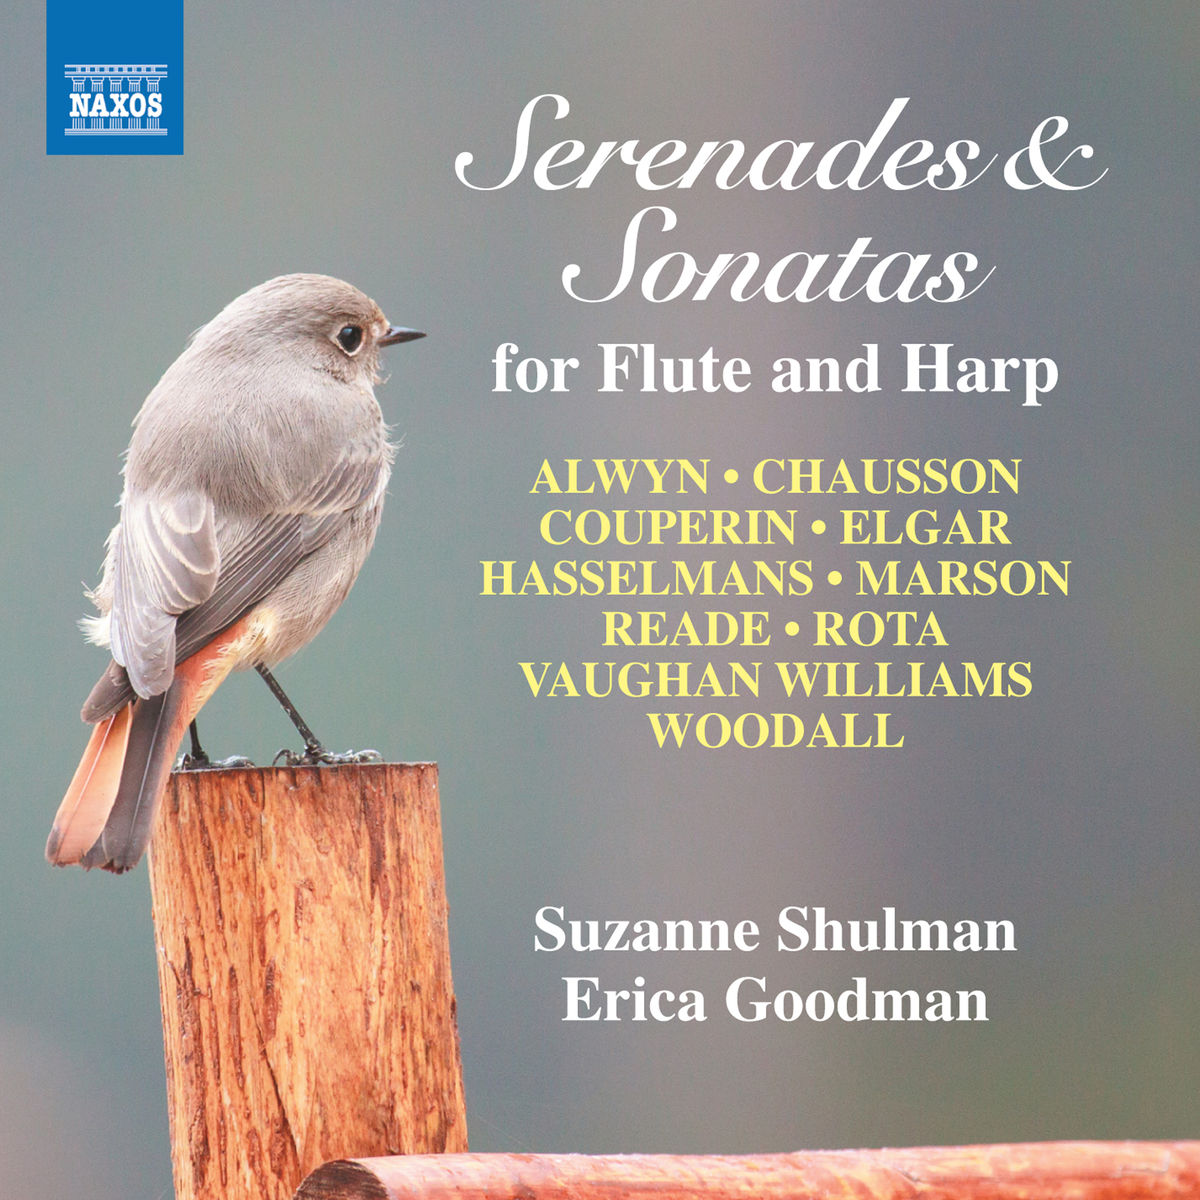 Suzanne Shulman & Erica Goodman - Serenades & Sonatas for Flute and Harp (2018) [FLAC 24bit/96kHz]